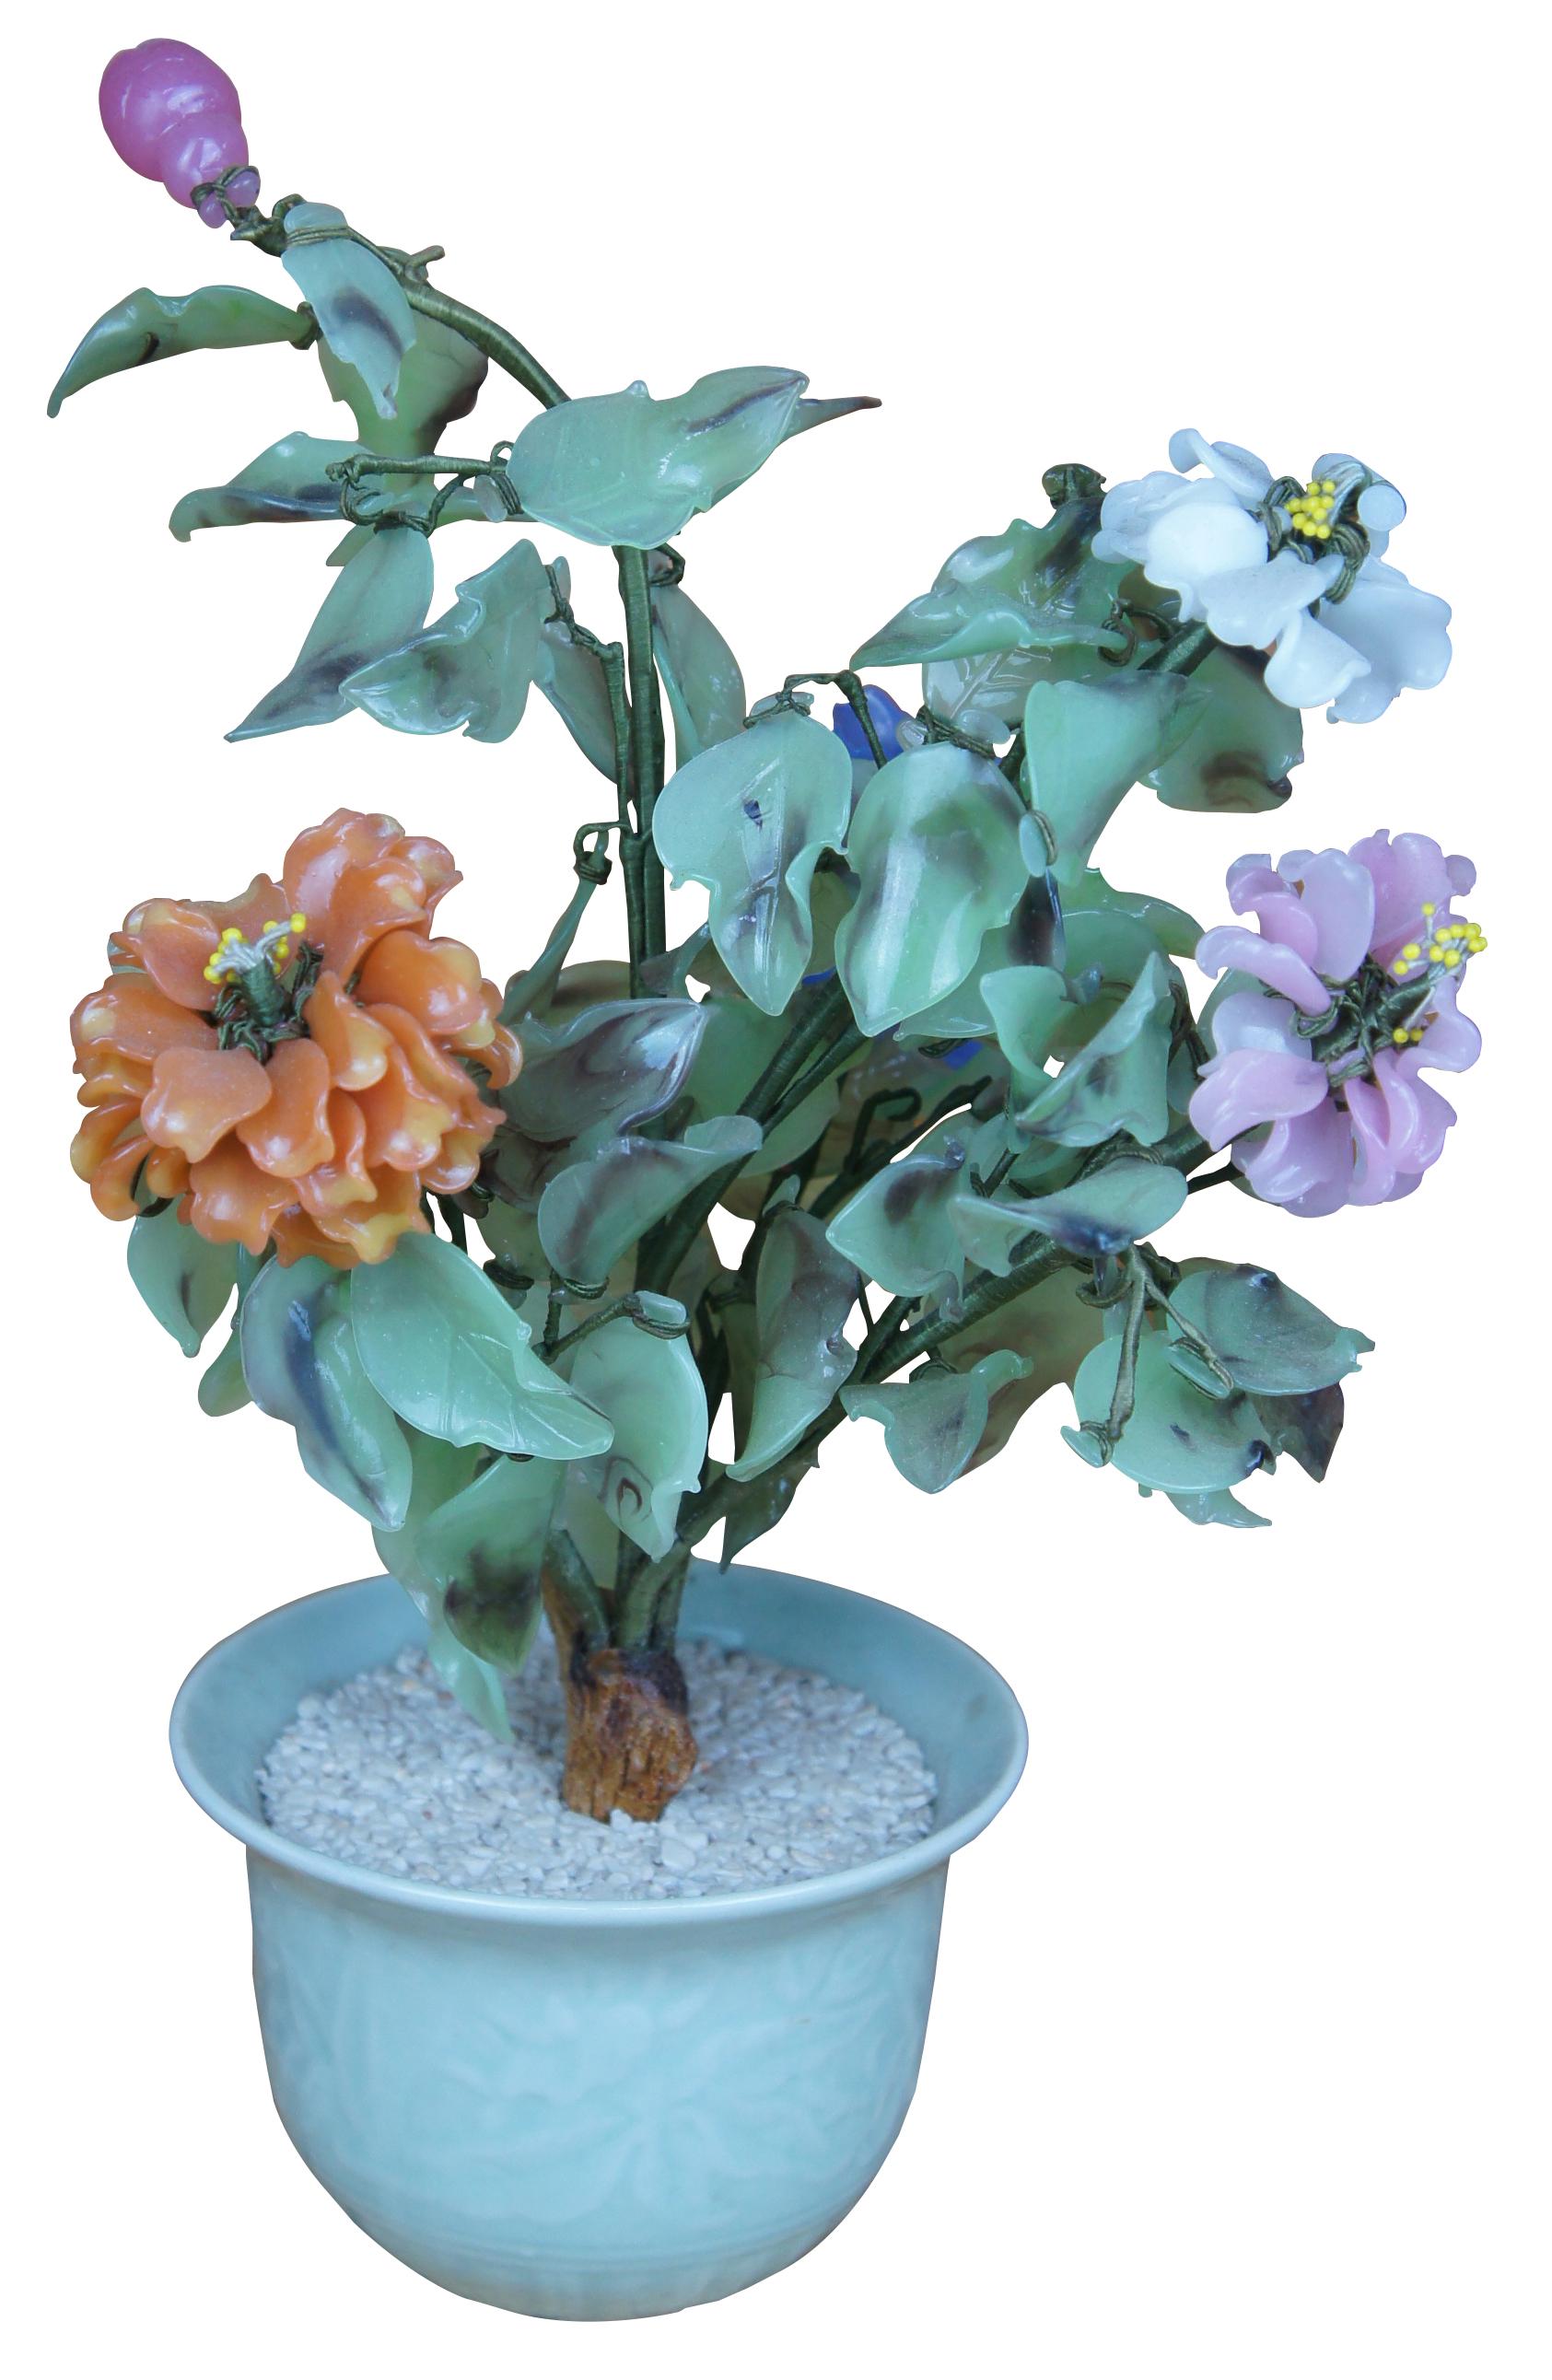 Mid 20th century Chrysanthemum & Jade bonsai tree with porcelain flower vase.
 